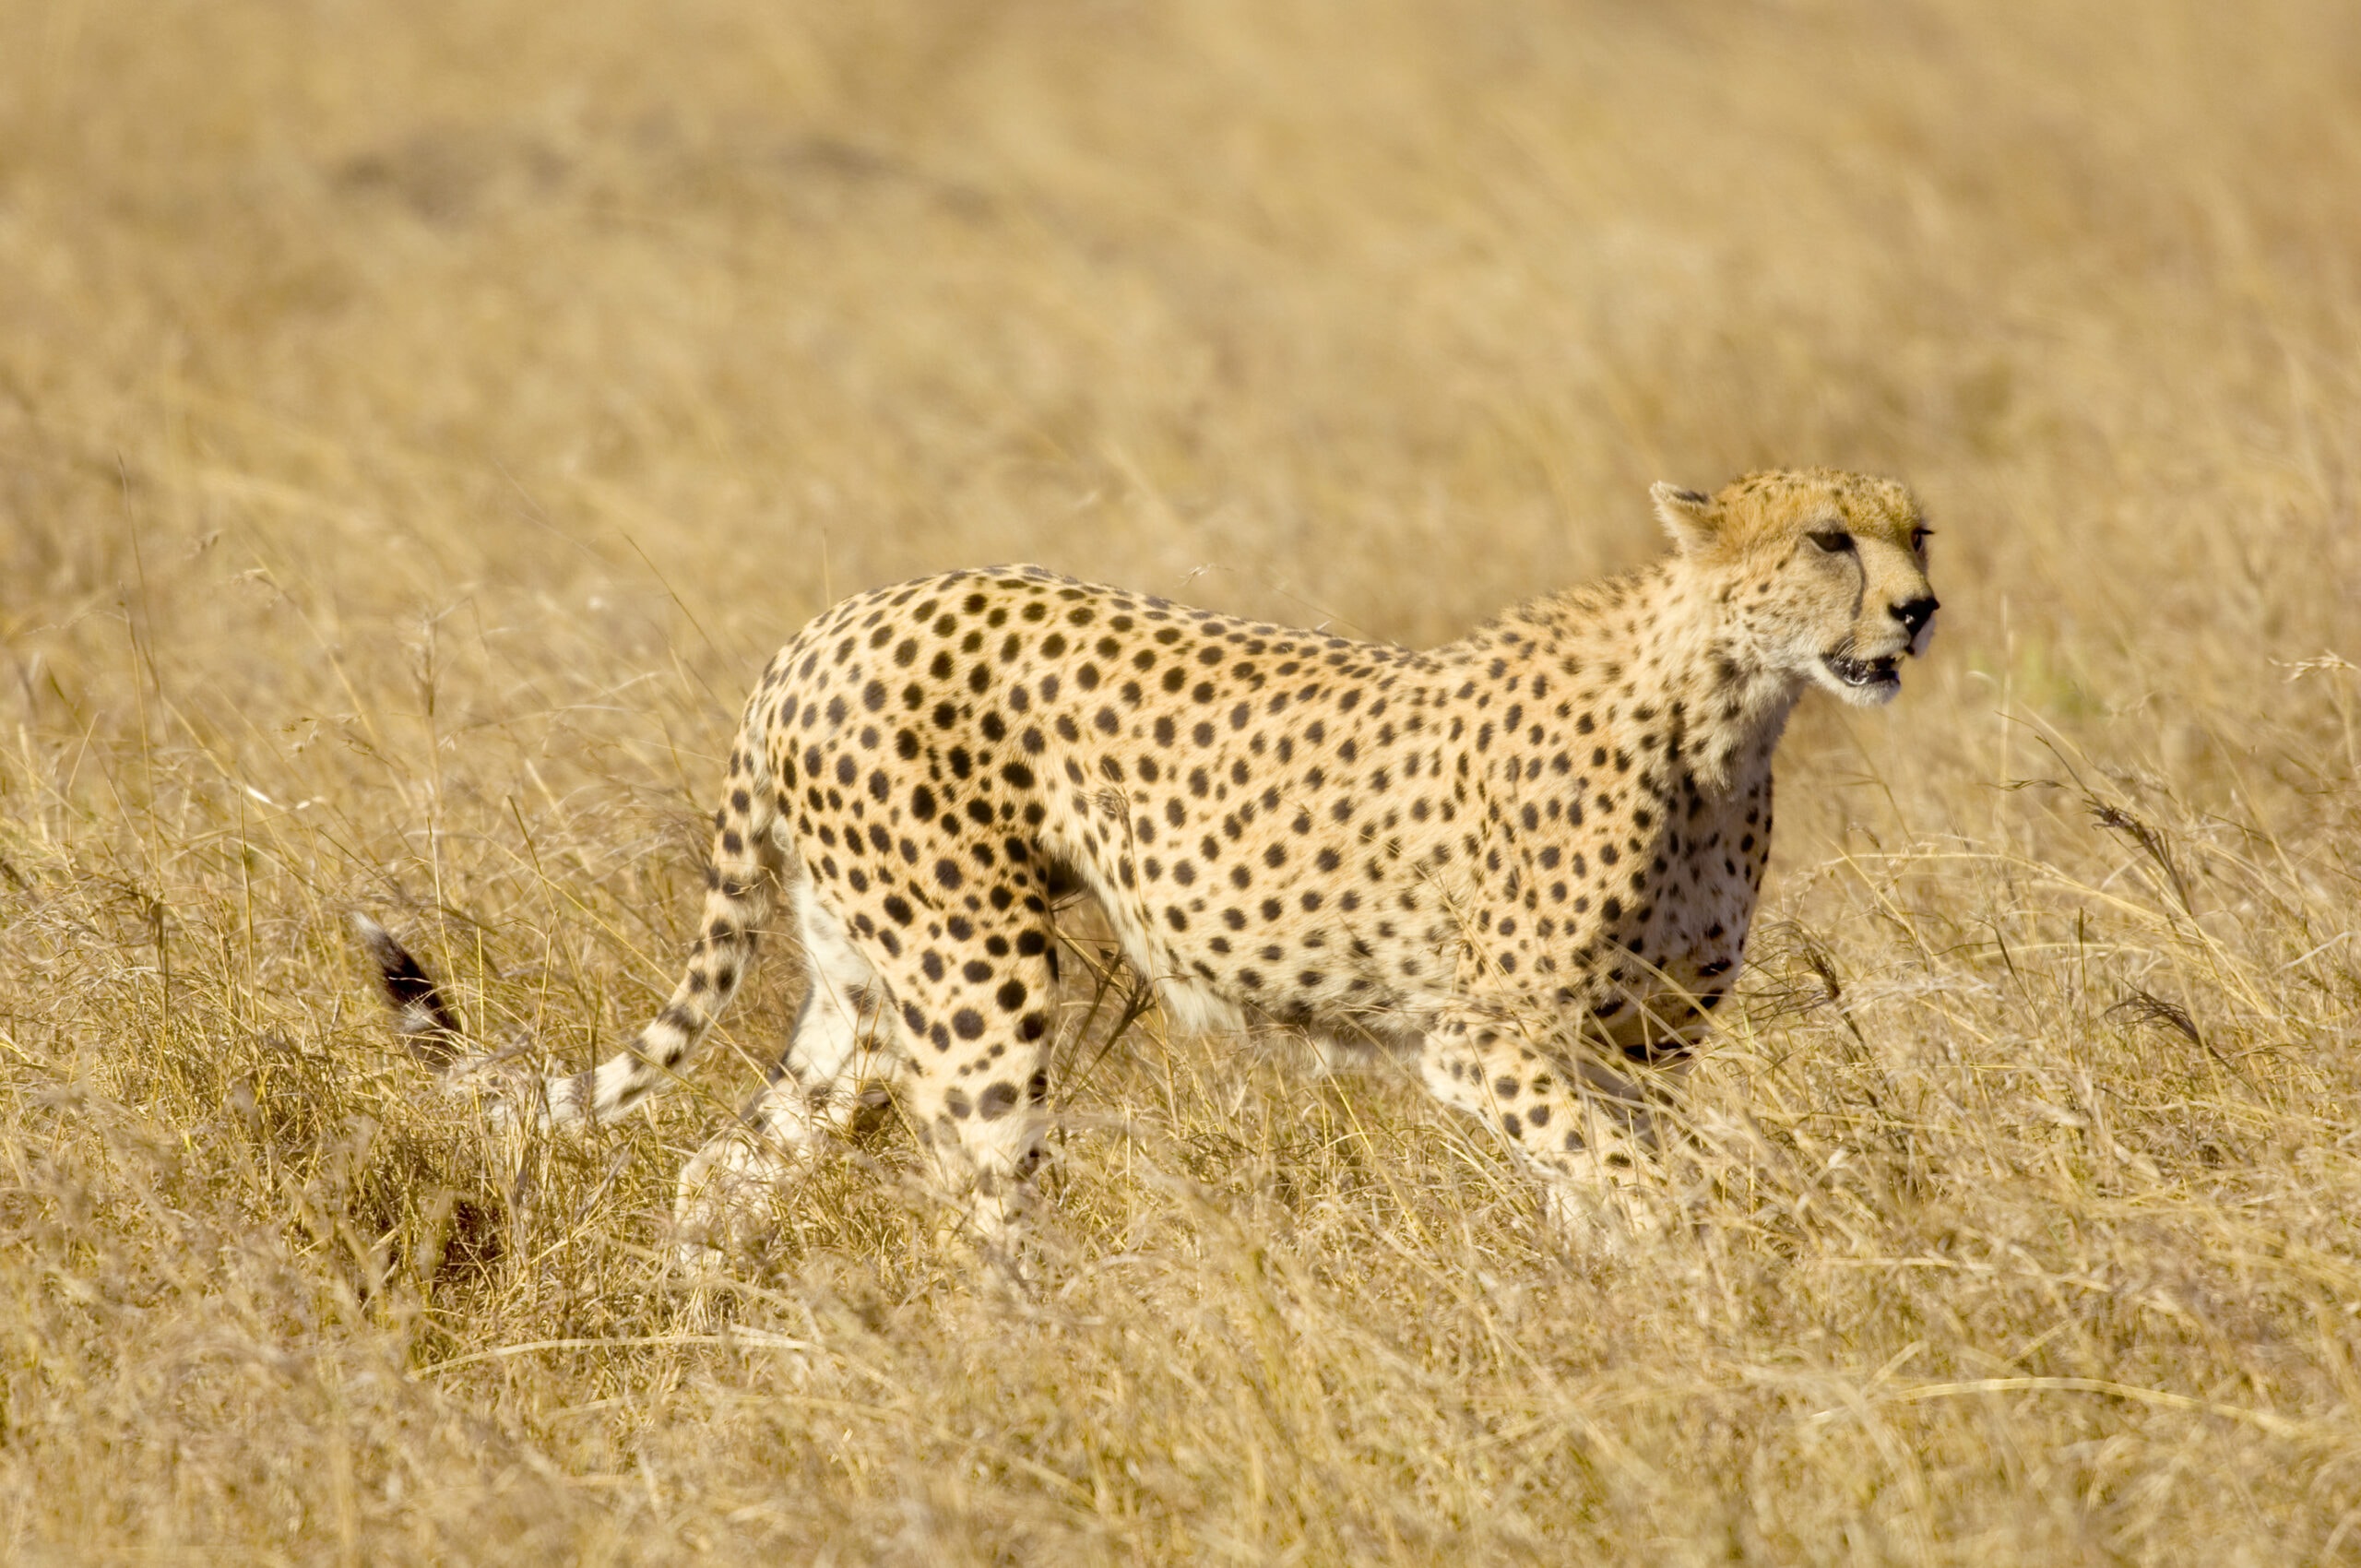 cheetah masai mara kenya 2021 08 26 18 00 22 utc 2 scaled